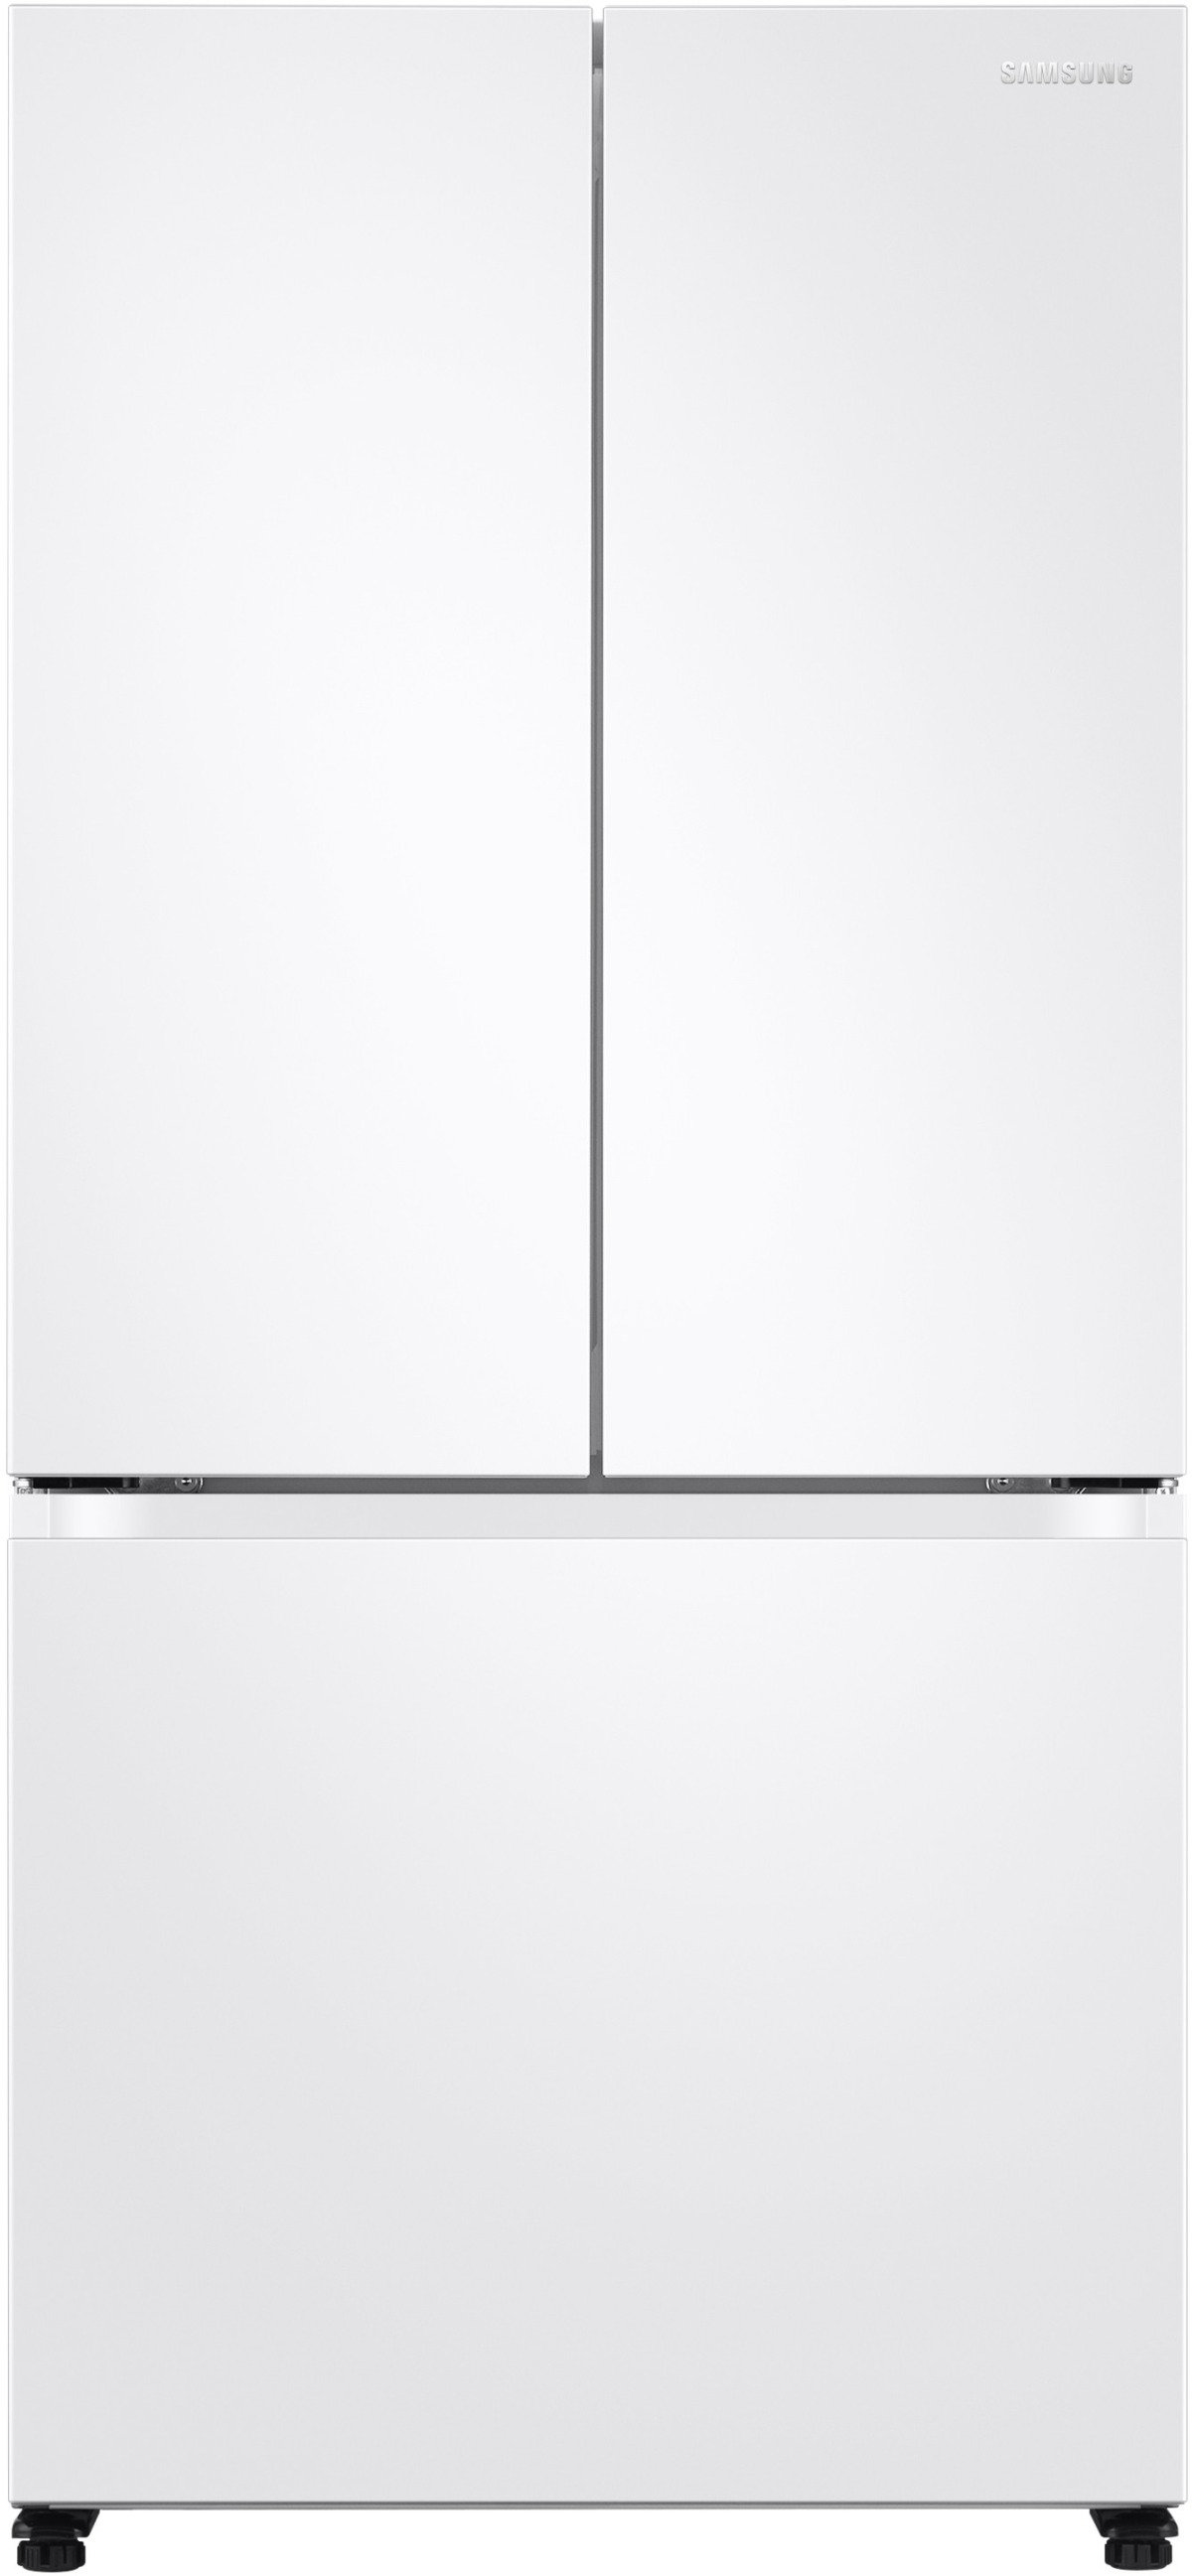 Samsung 17.5 Cu. Ft. Fingerprint Resistant White Counter Depth French Door Refrigerator